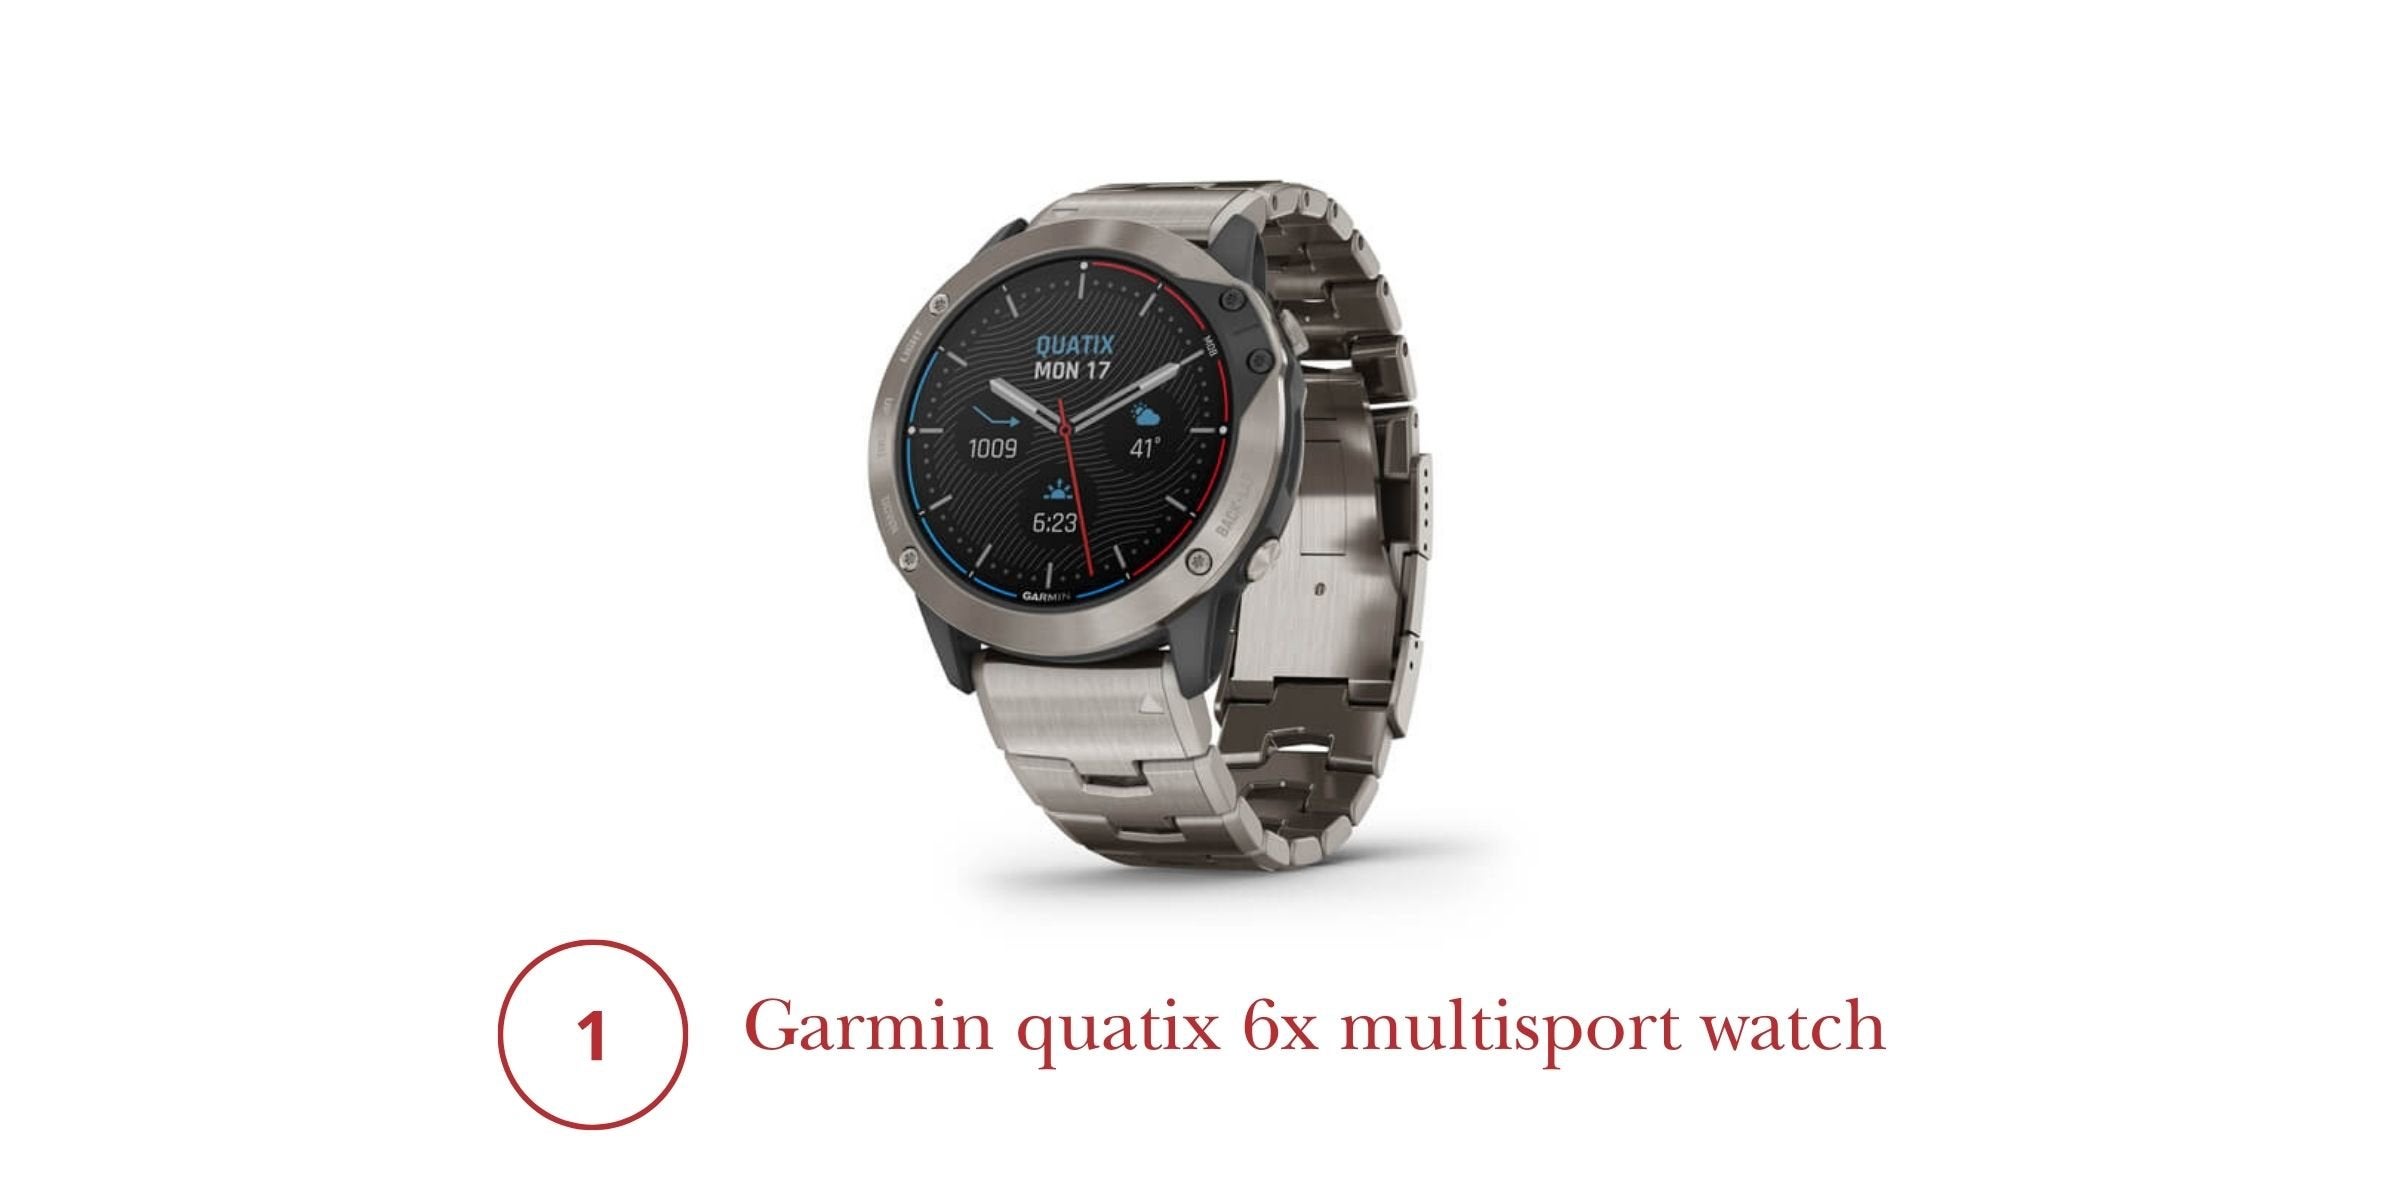 Garmin quatix watch